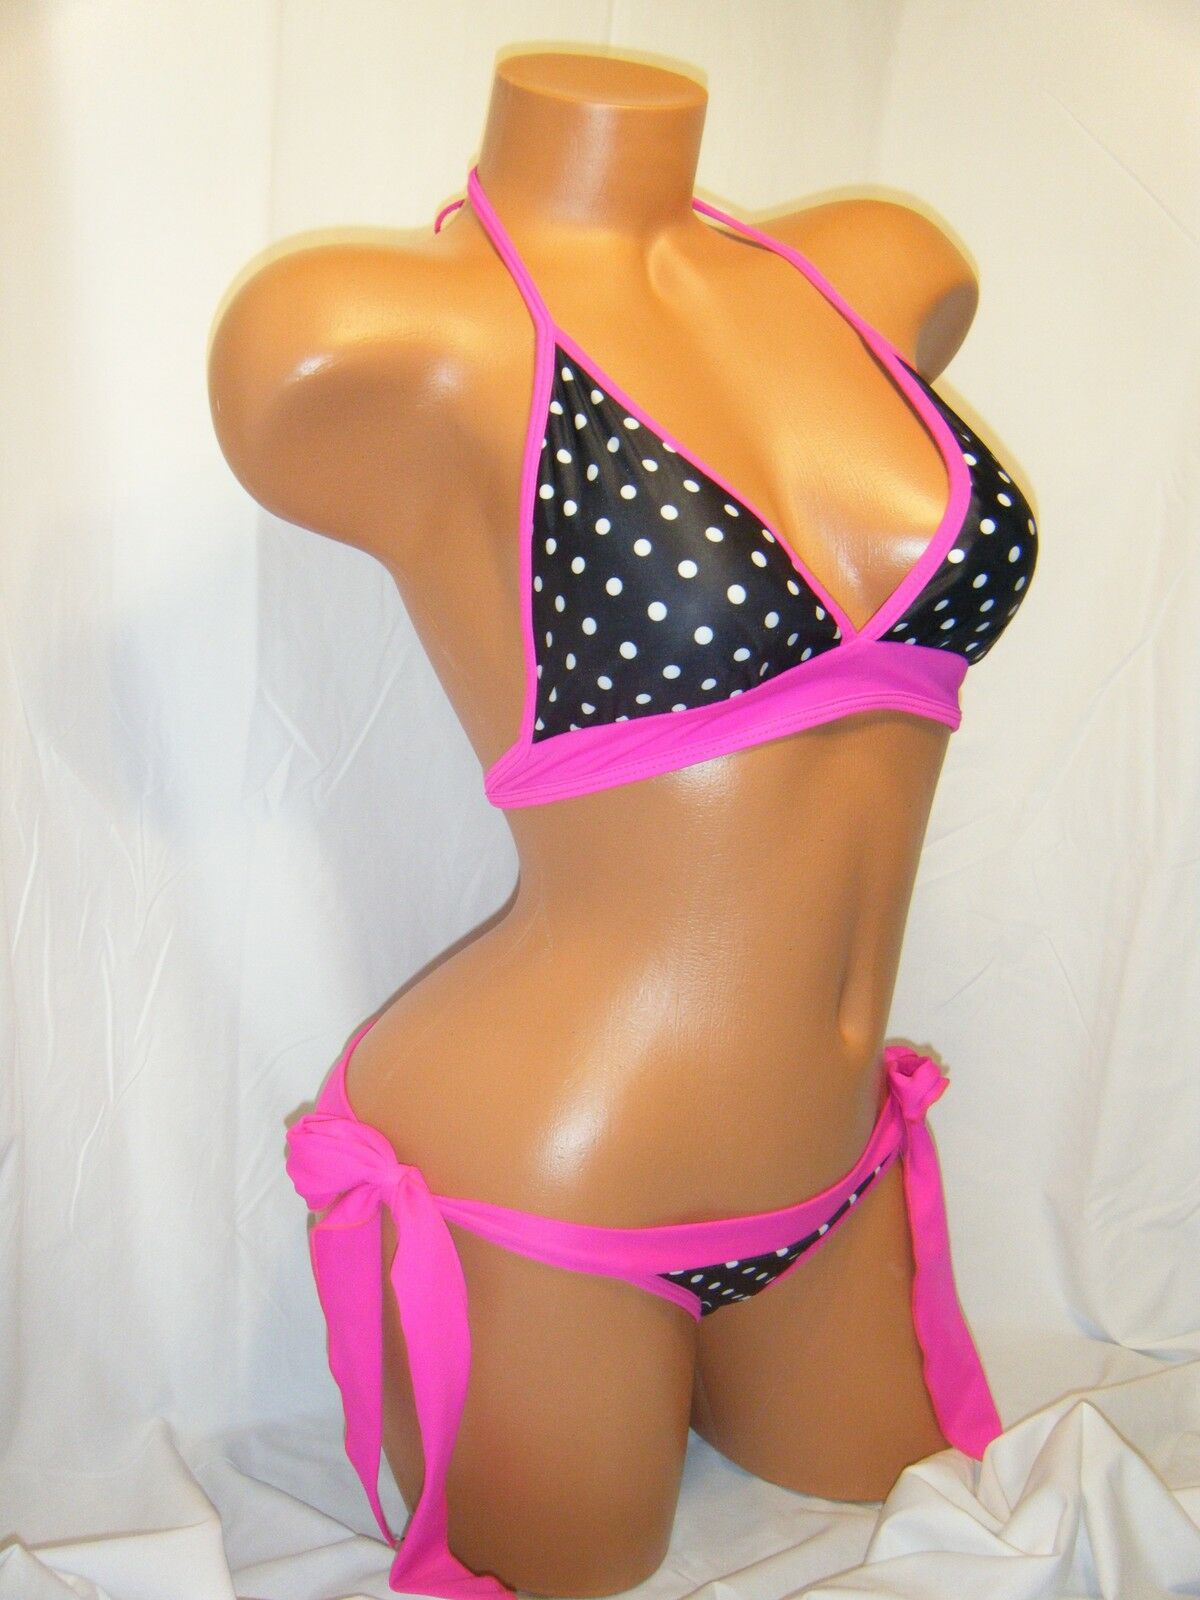 Sexy Bikini Halter Triangle Padded Top Tie Pucker Bottom Swimsuit Black Pink